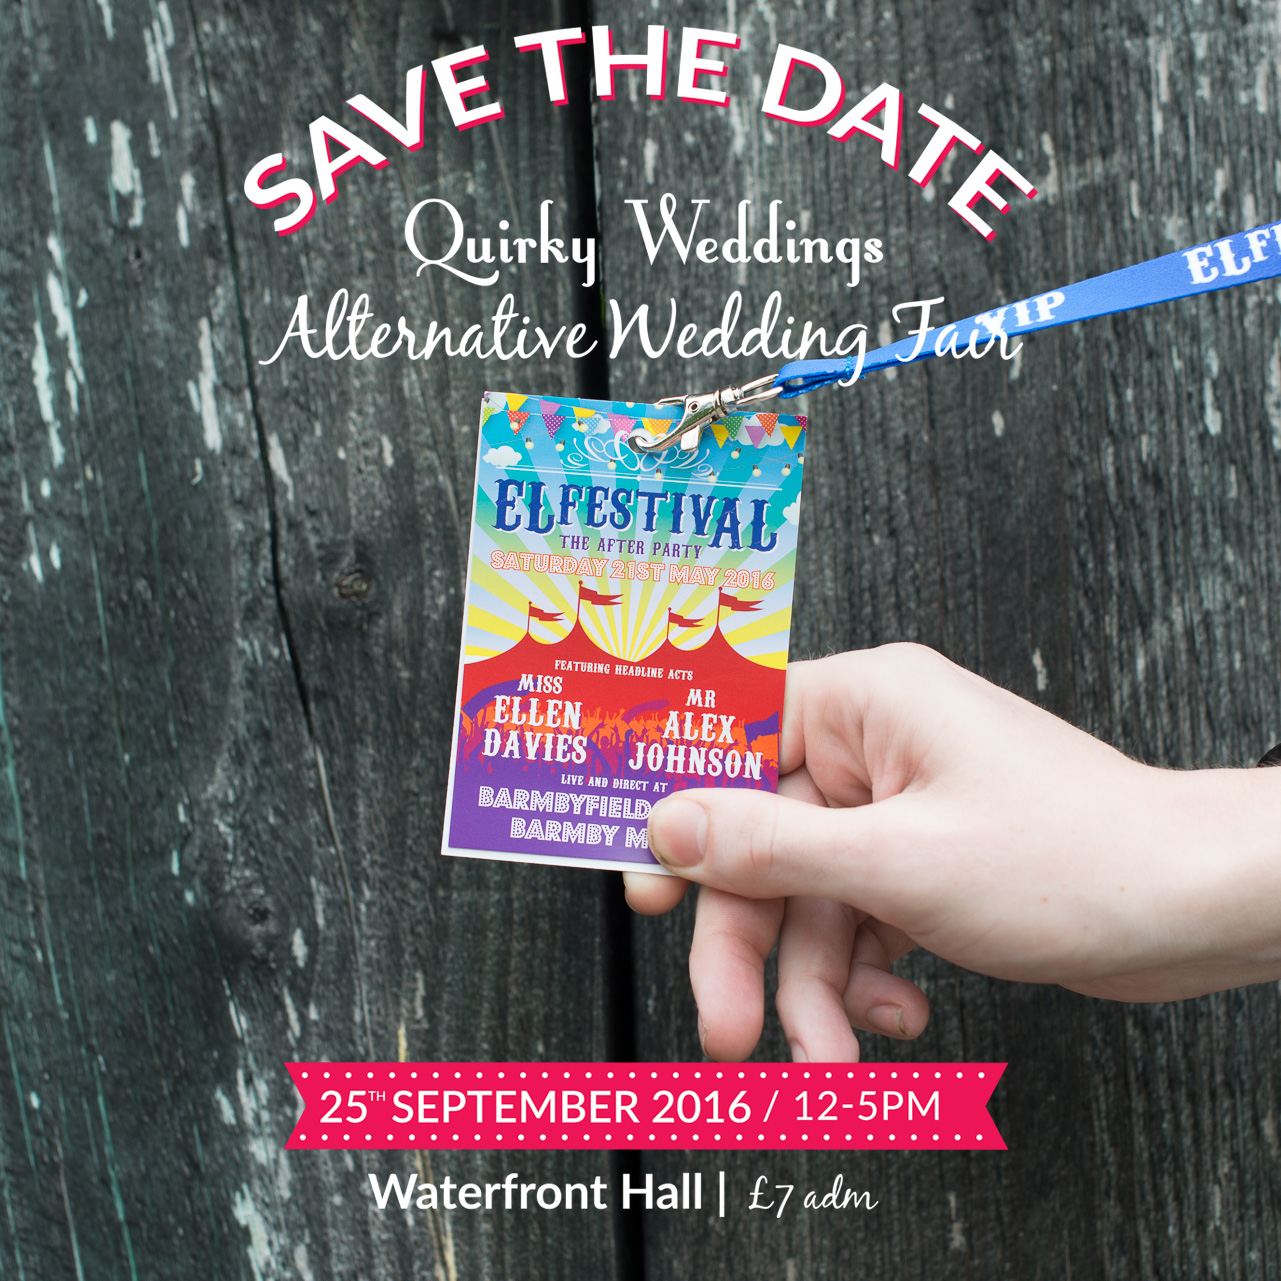 wedfest quirky weddings